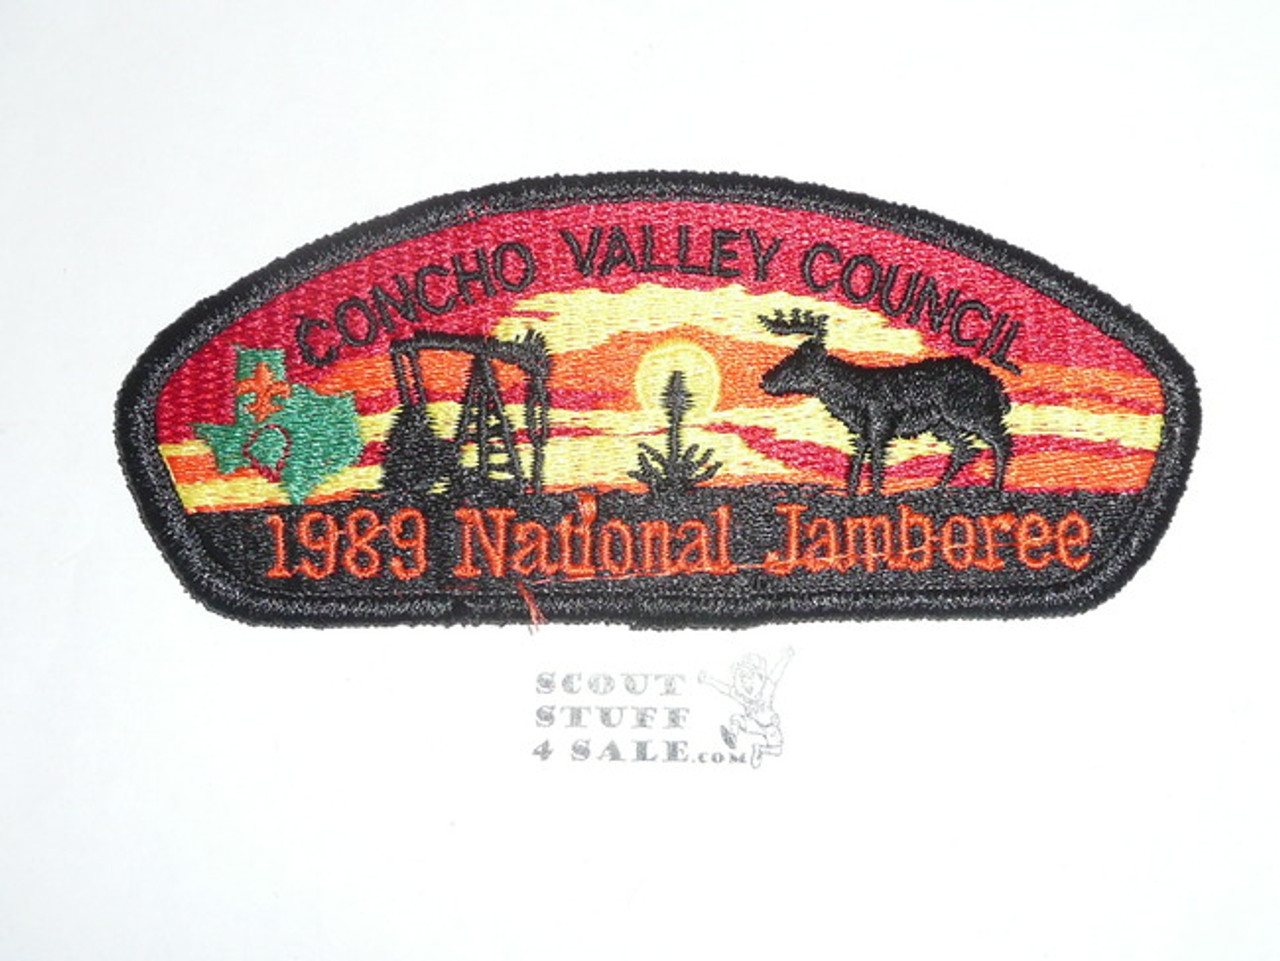 1989 National Jamboree JSP - Concho Valley Council